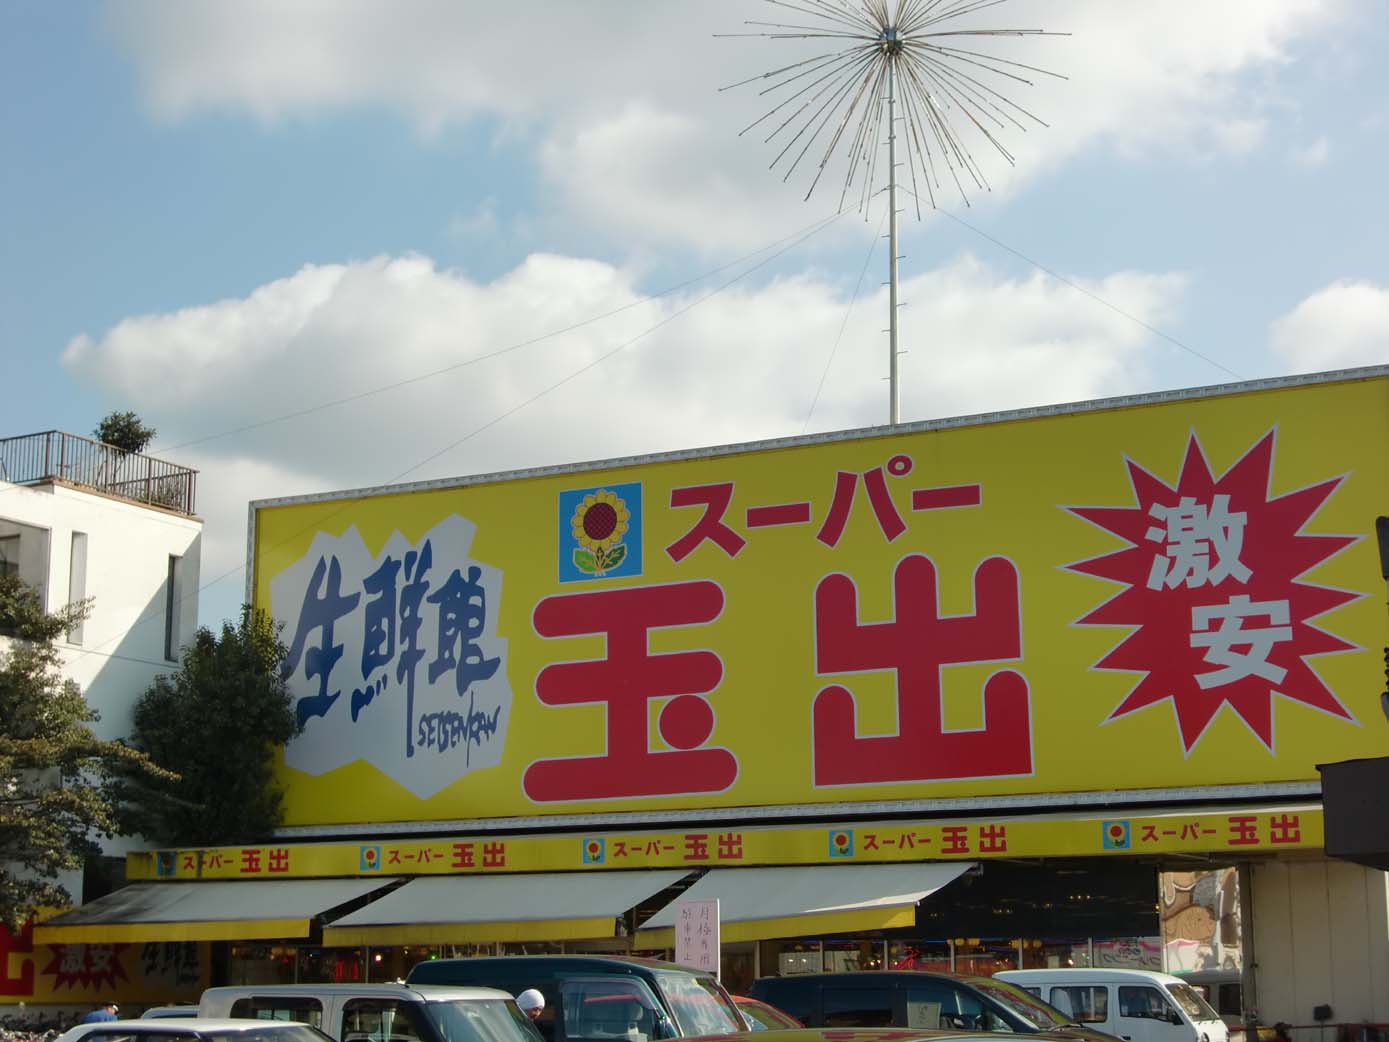 Supermarket. 886m to Super Tamade (Super)